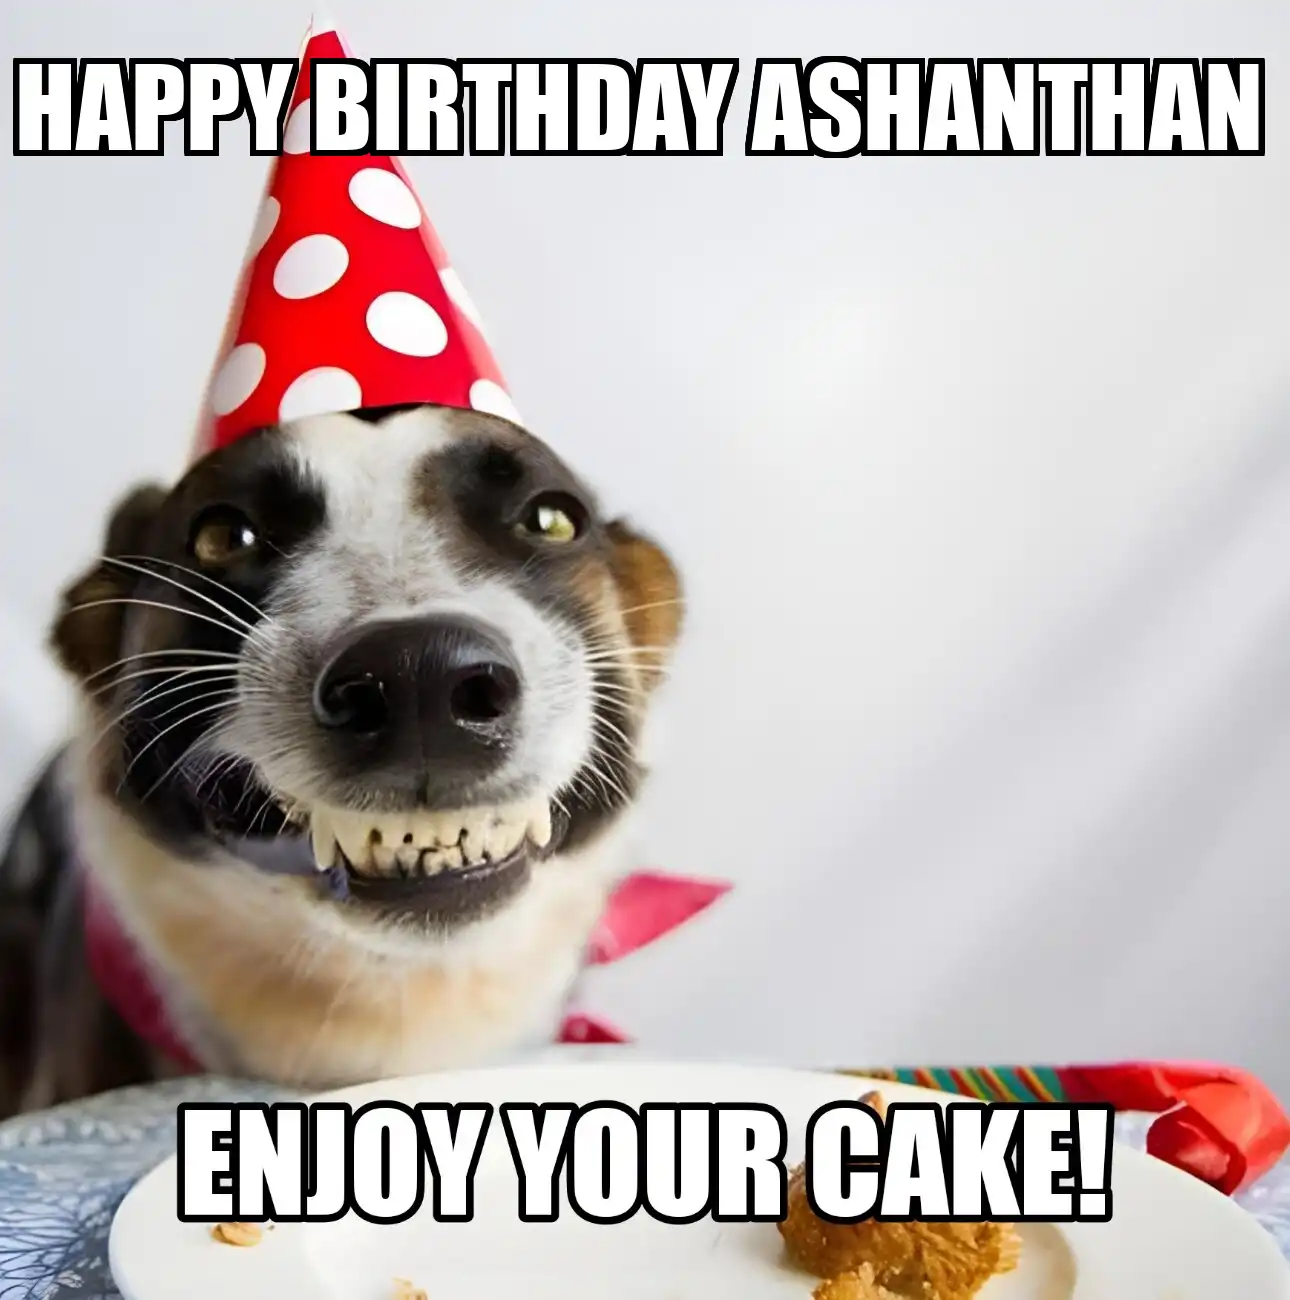 Happy Birthday Ashanthan Enjoy Your Cake Dog Meme